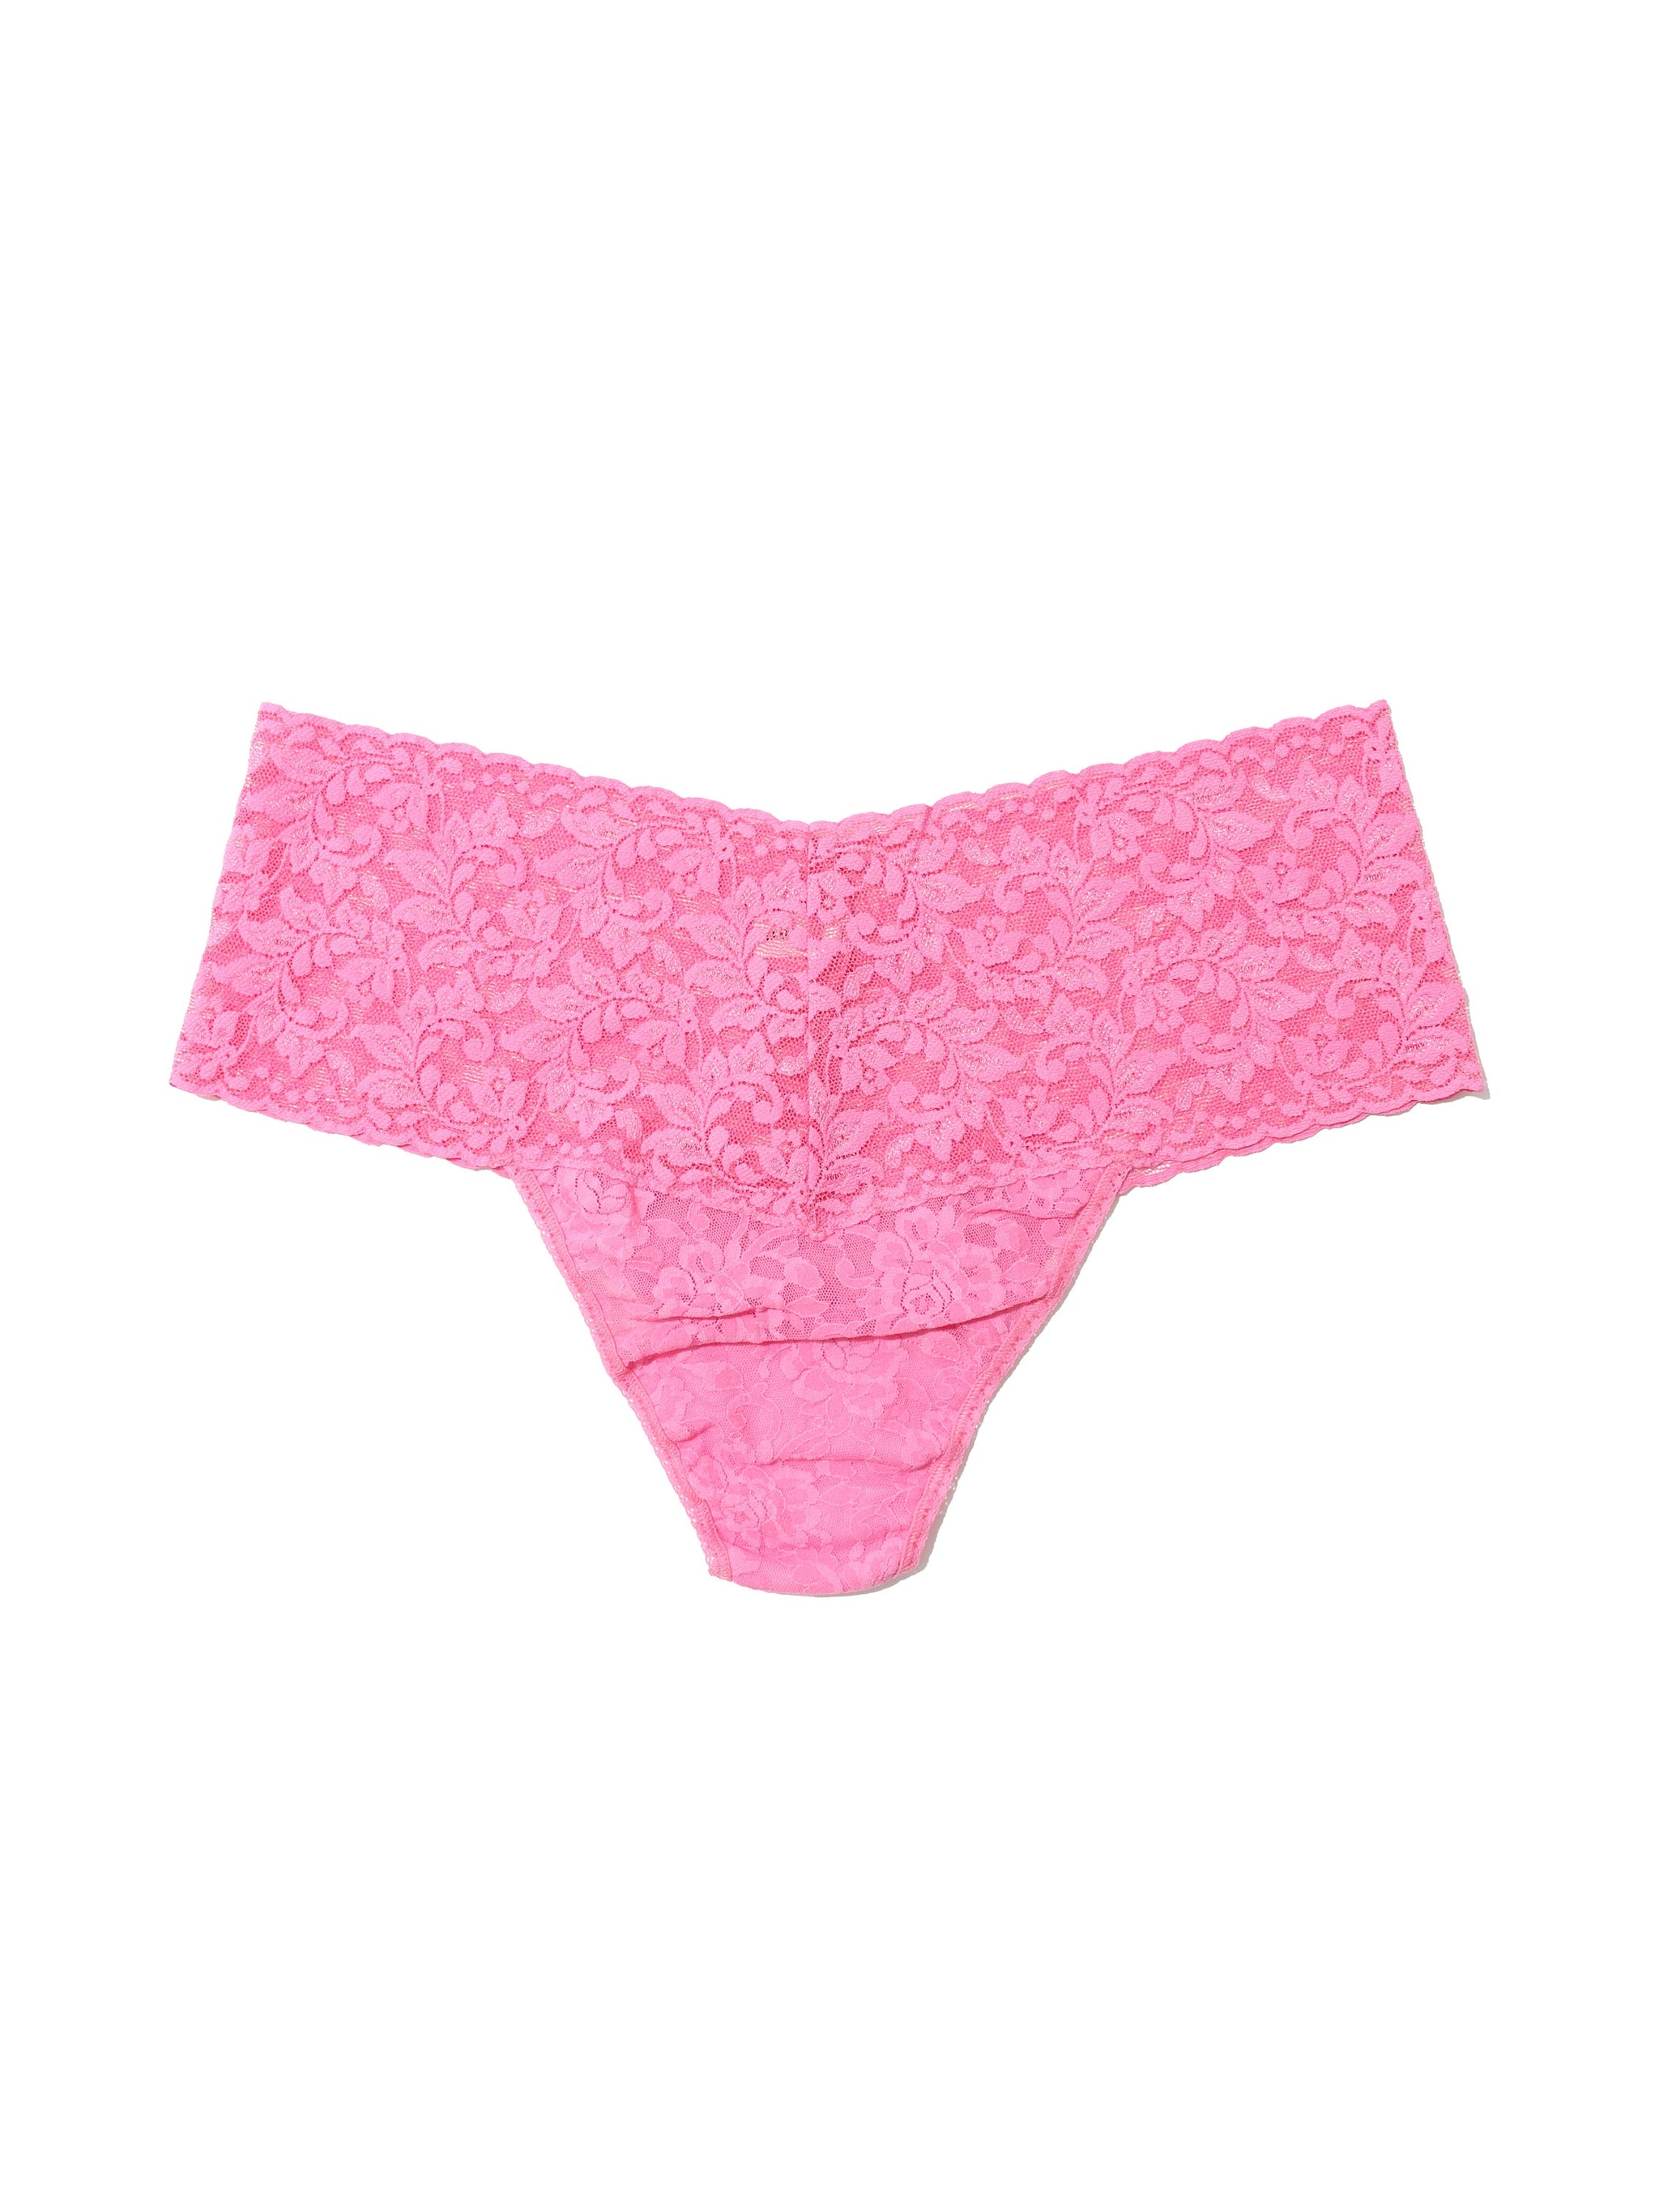 Plus Size Retro Lace Thong Taffy Pink